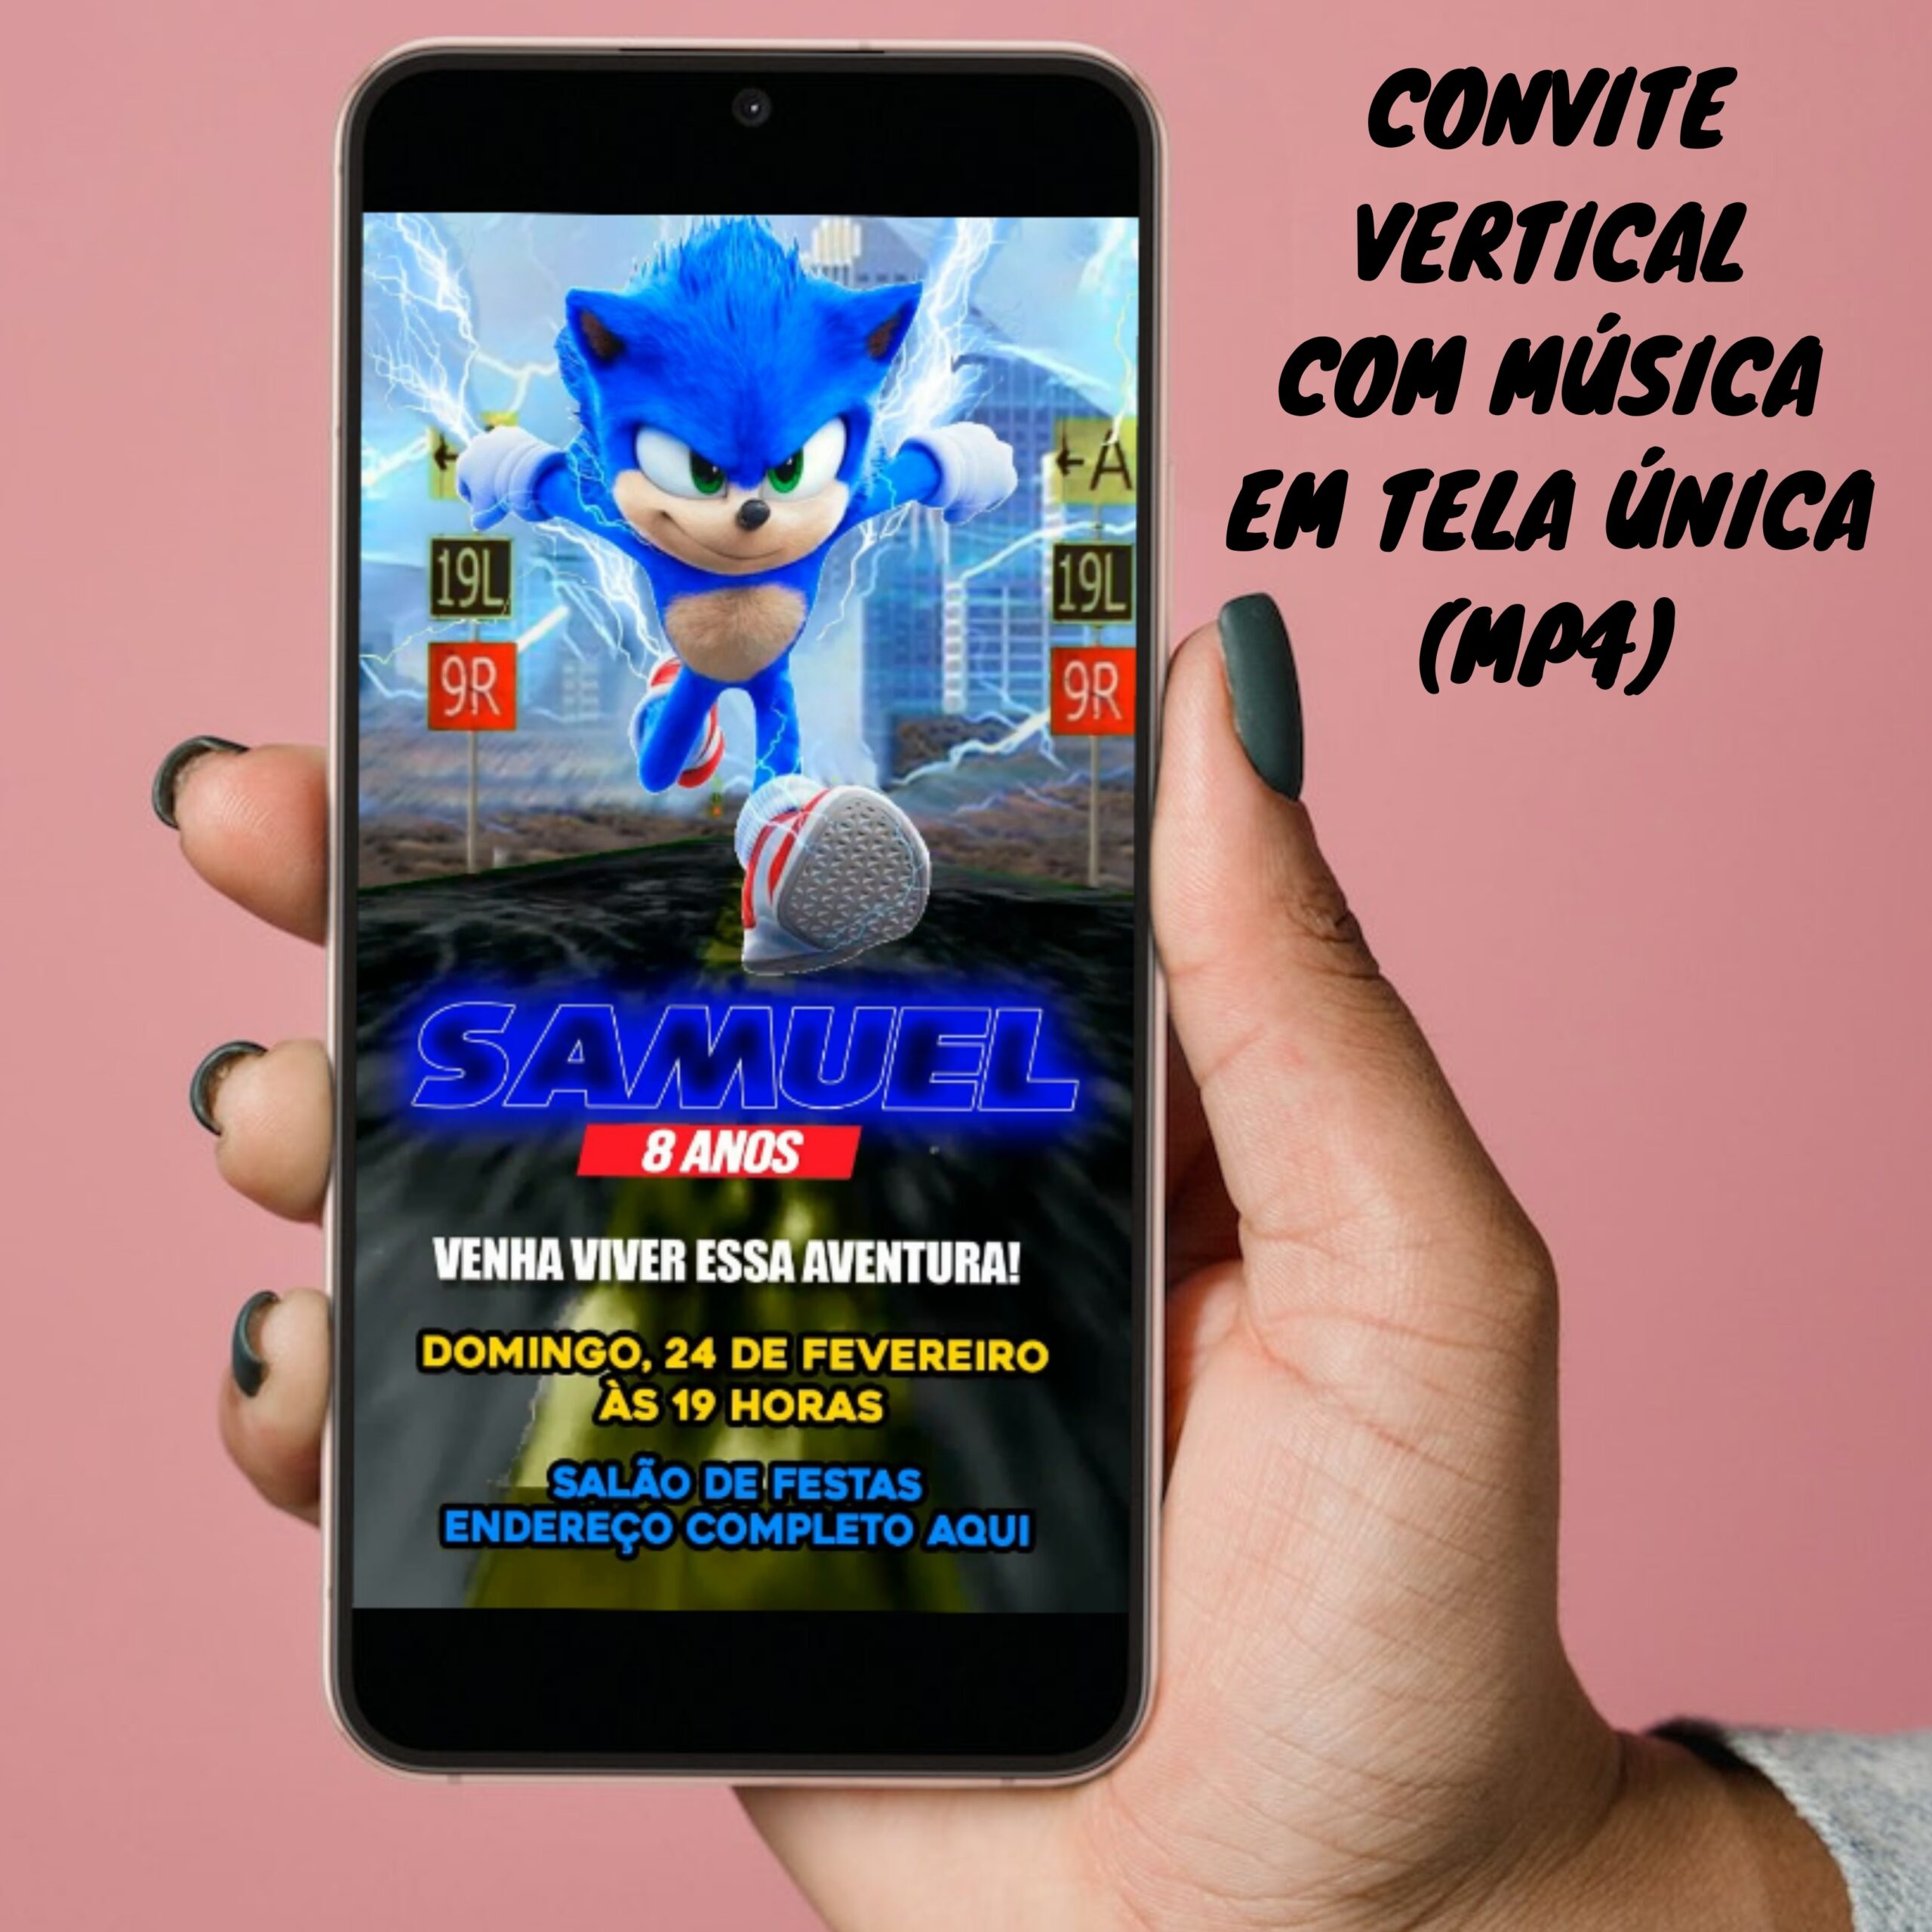 Convite Digital Interativo Tema Sonic - Desconto no Preço